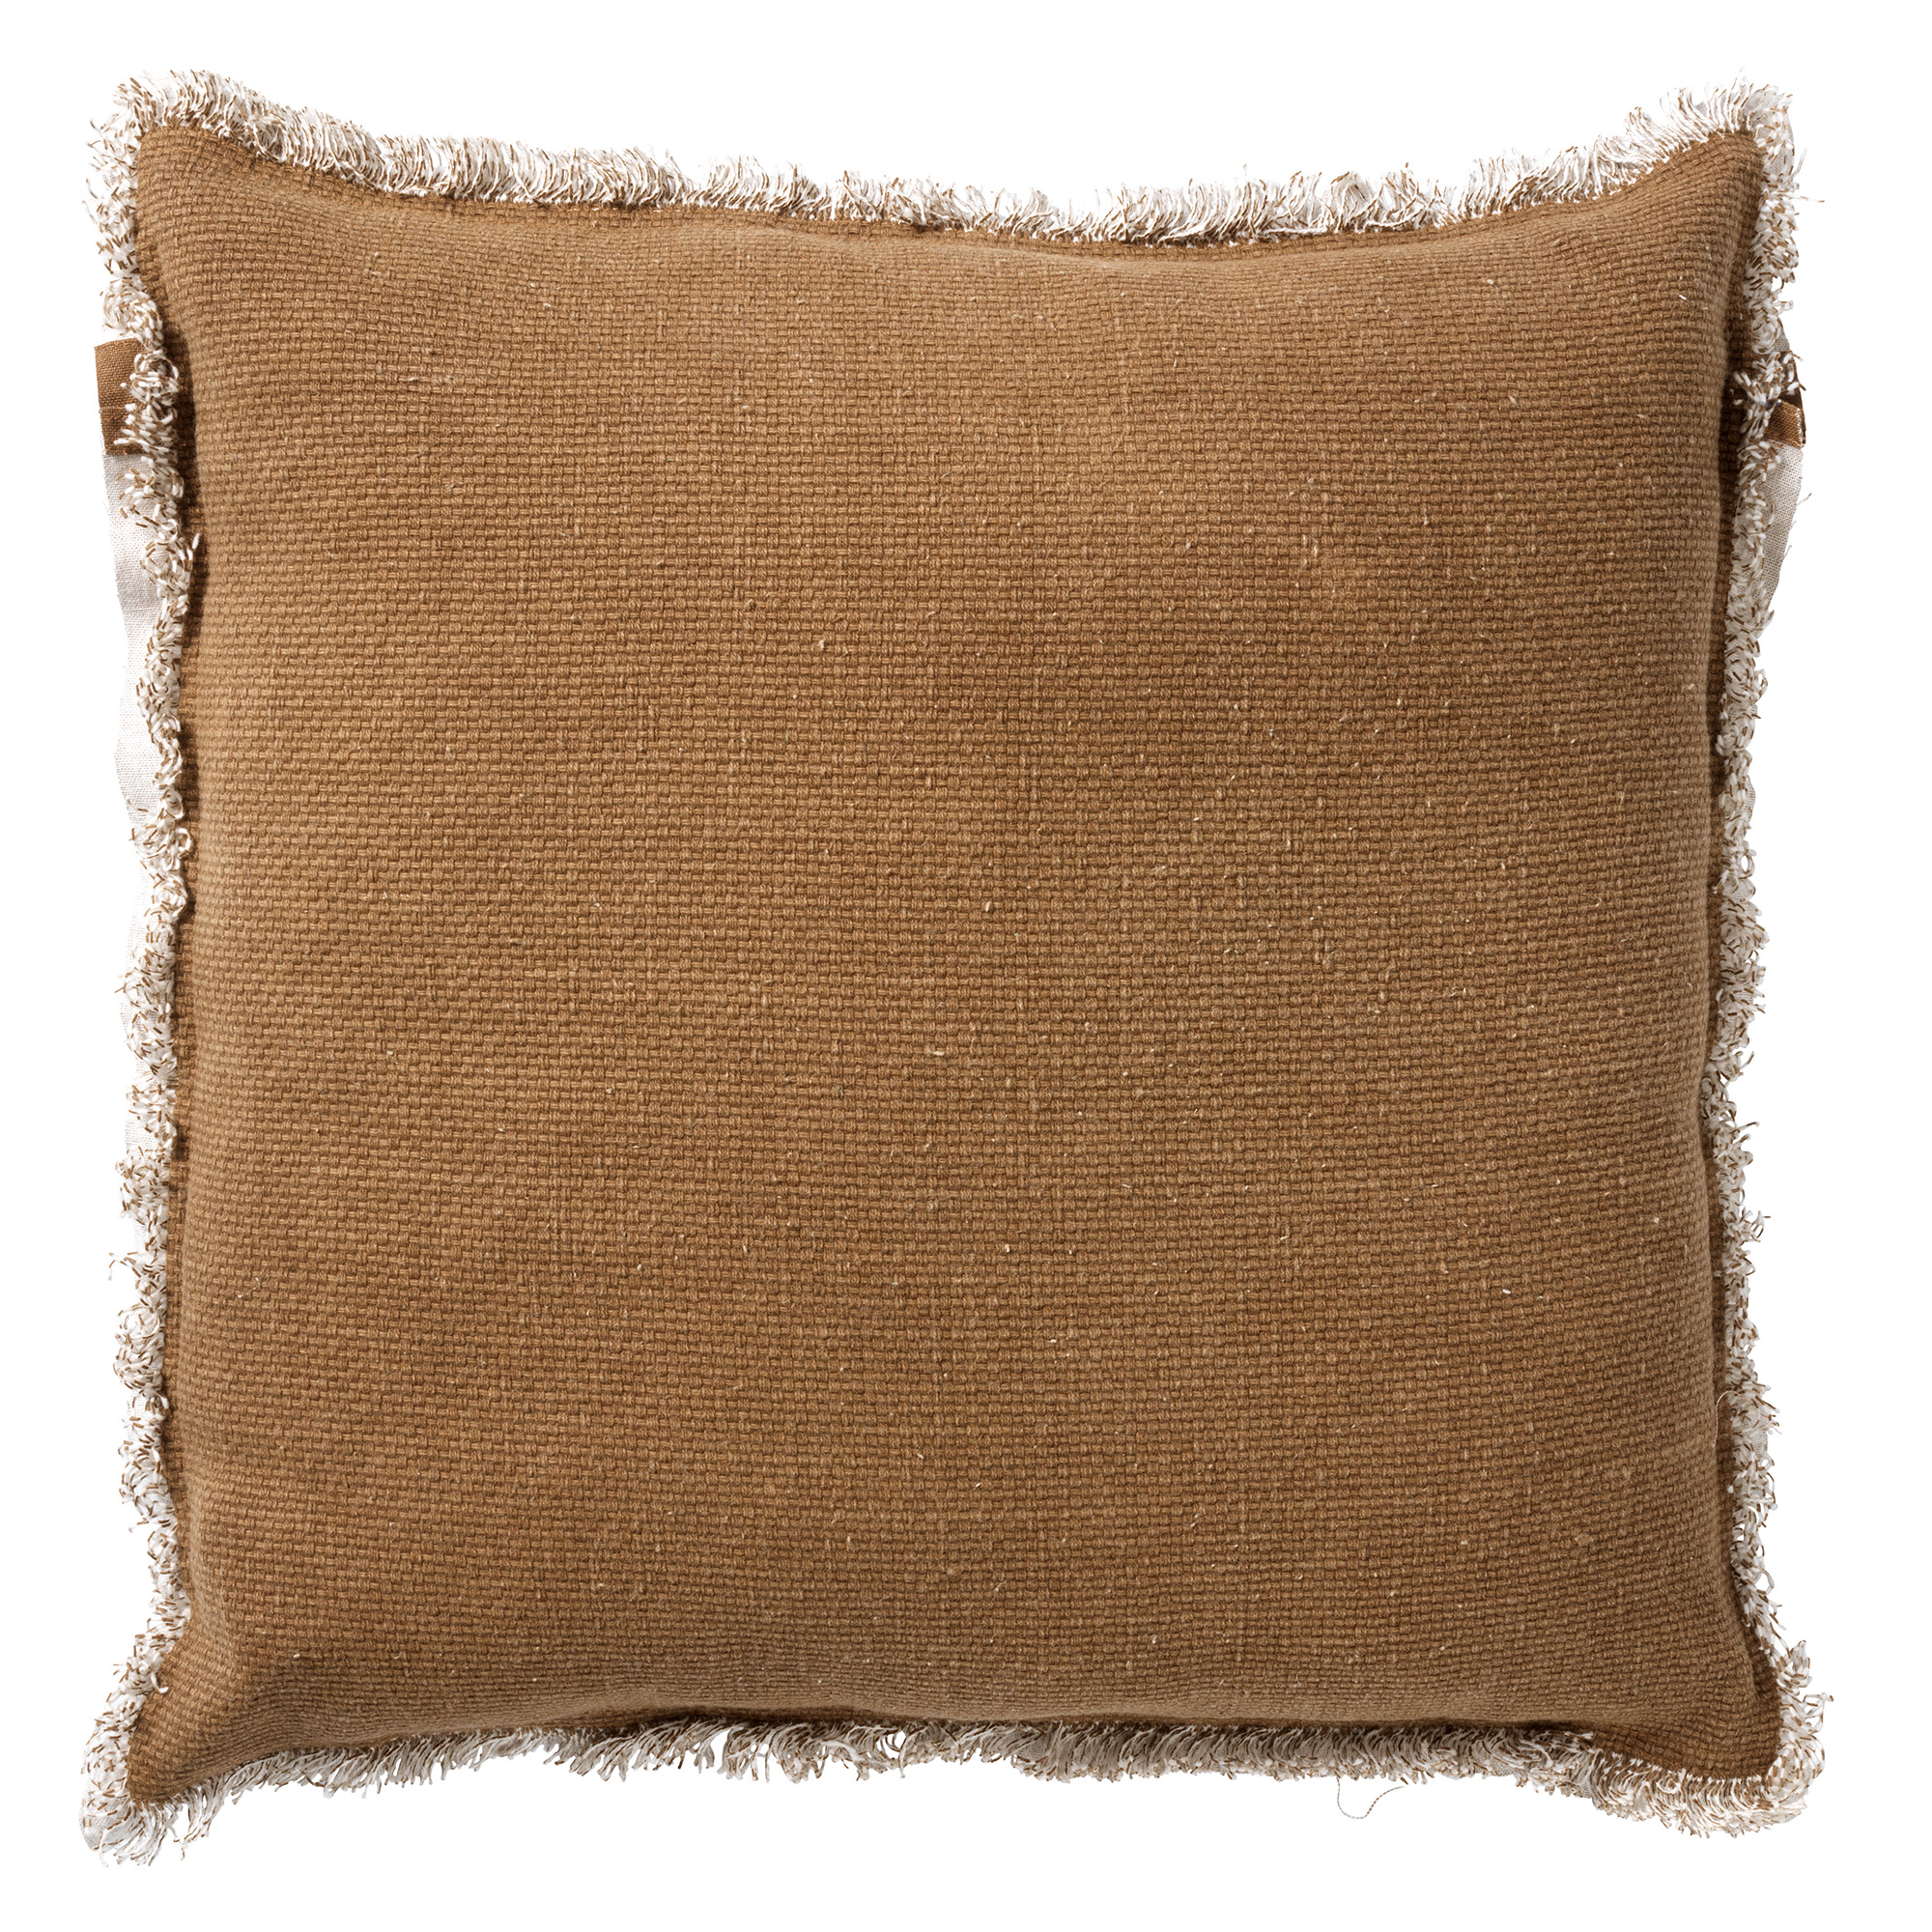 BURTO - Cushion 60x60 cm Tobacco brown - brown